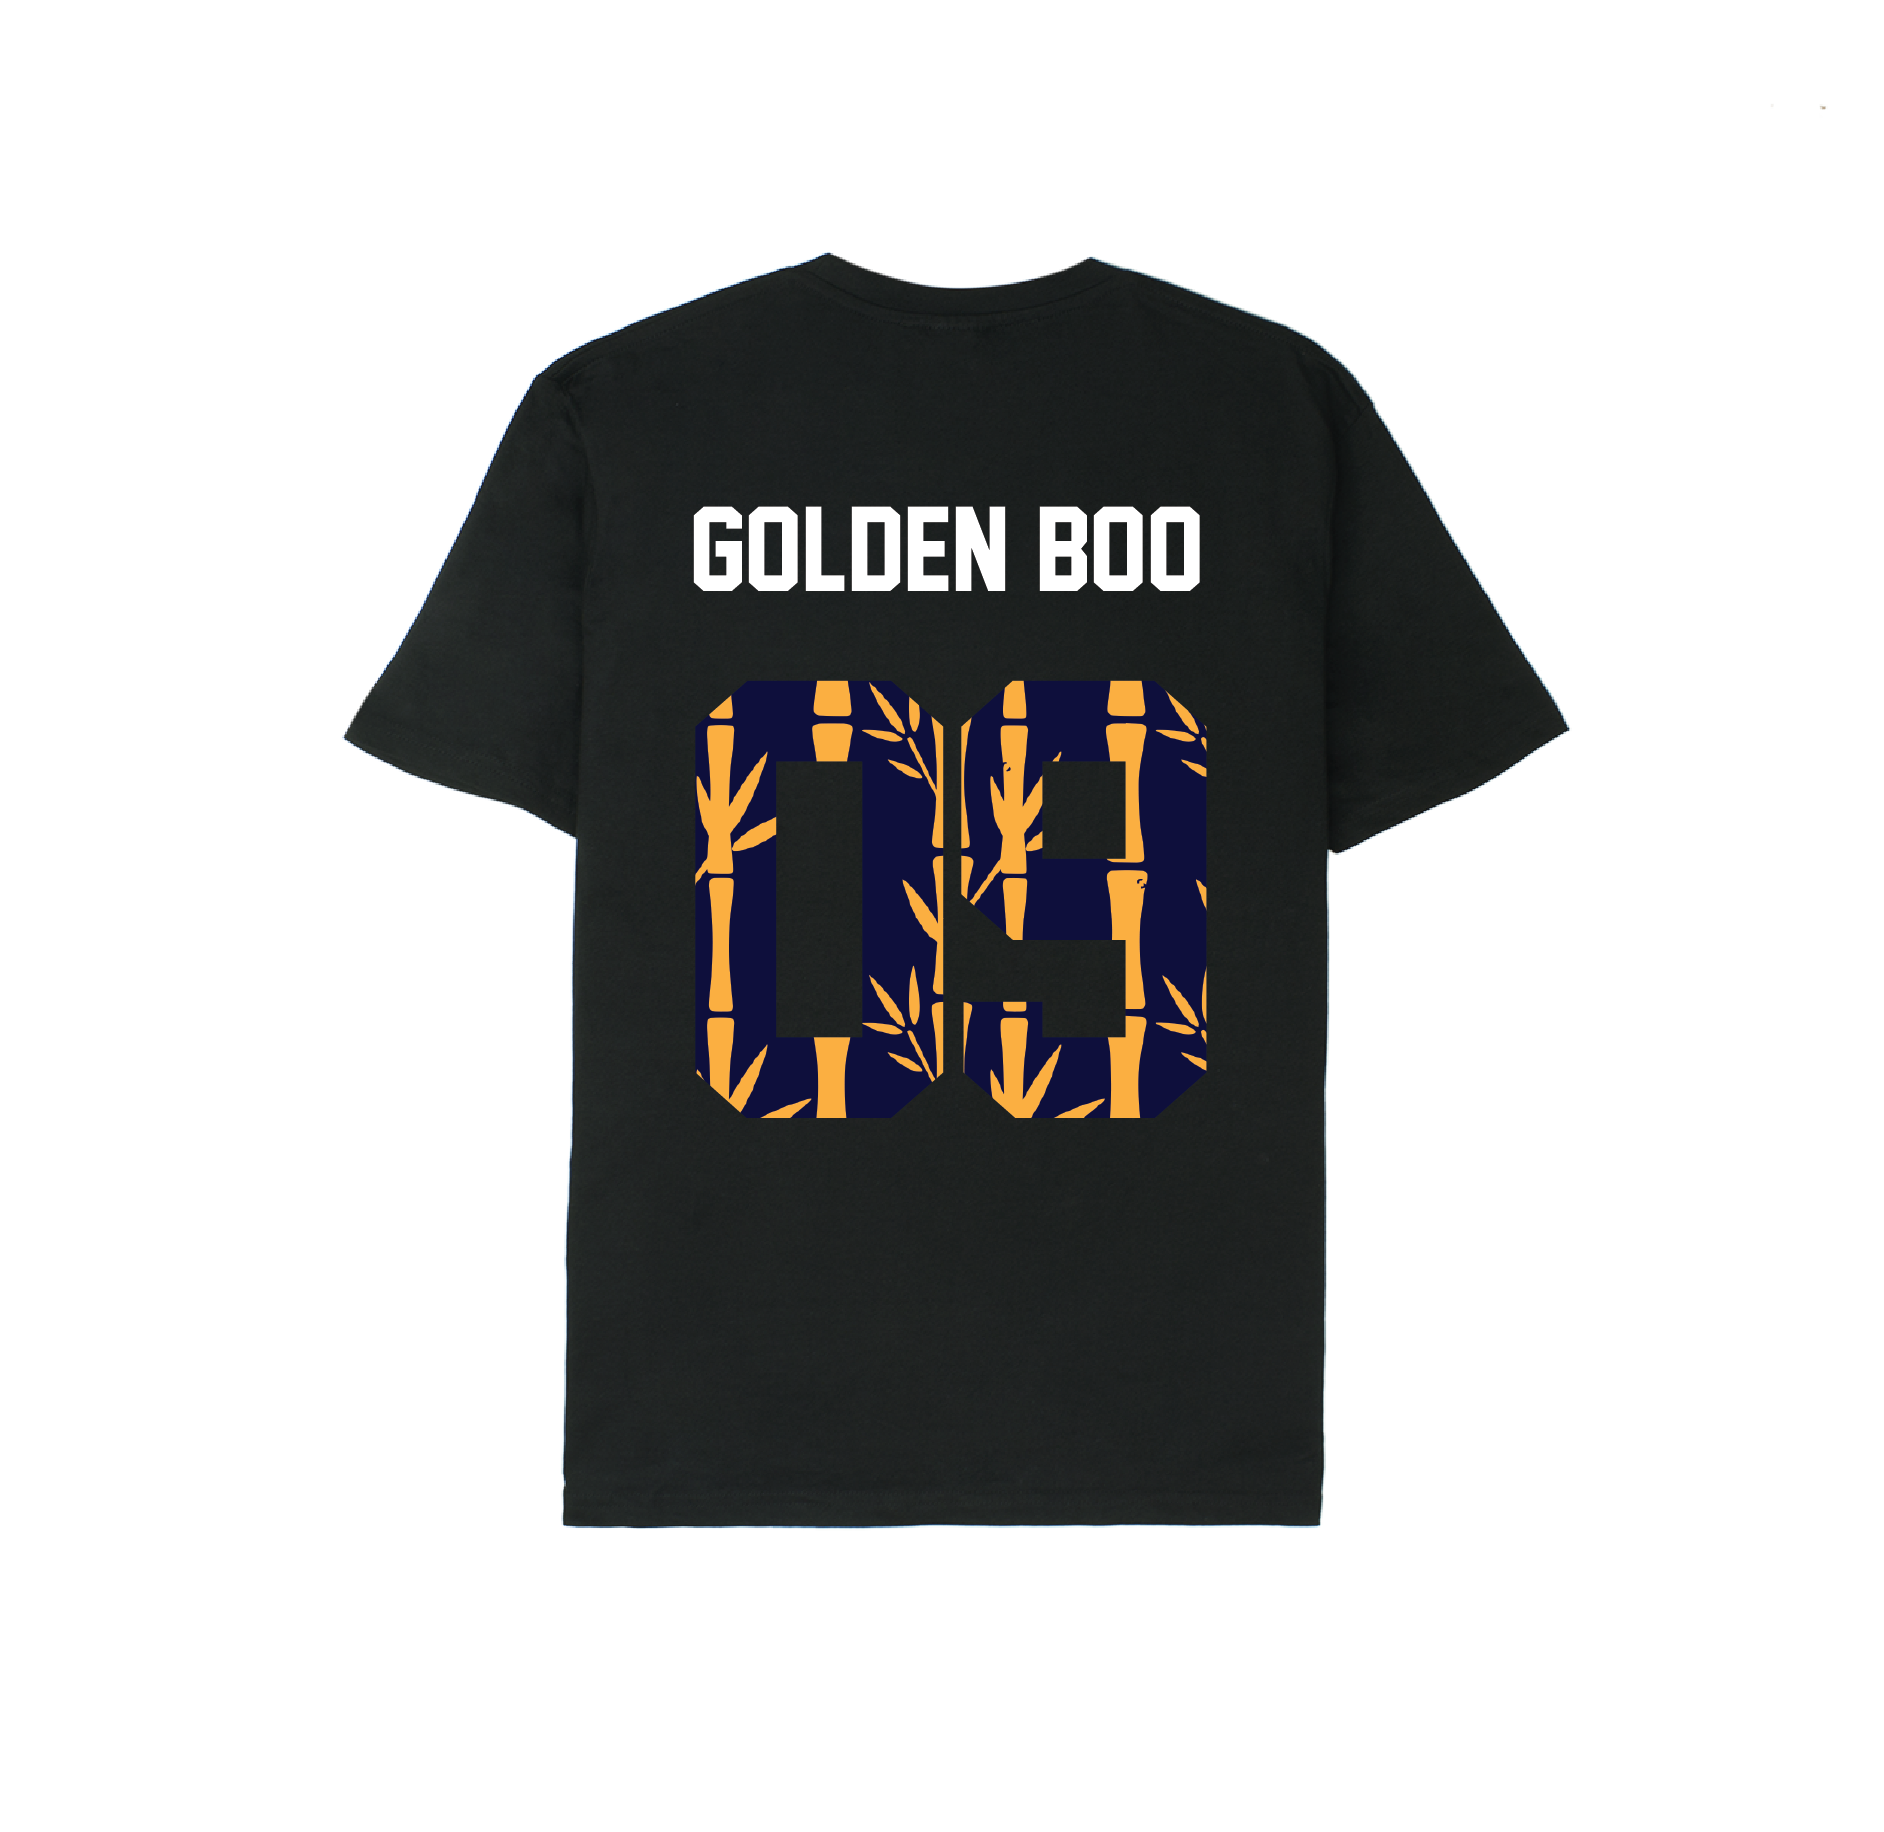 Golden boo - Costar Me